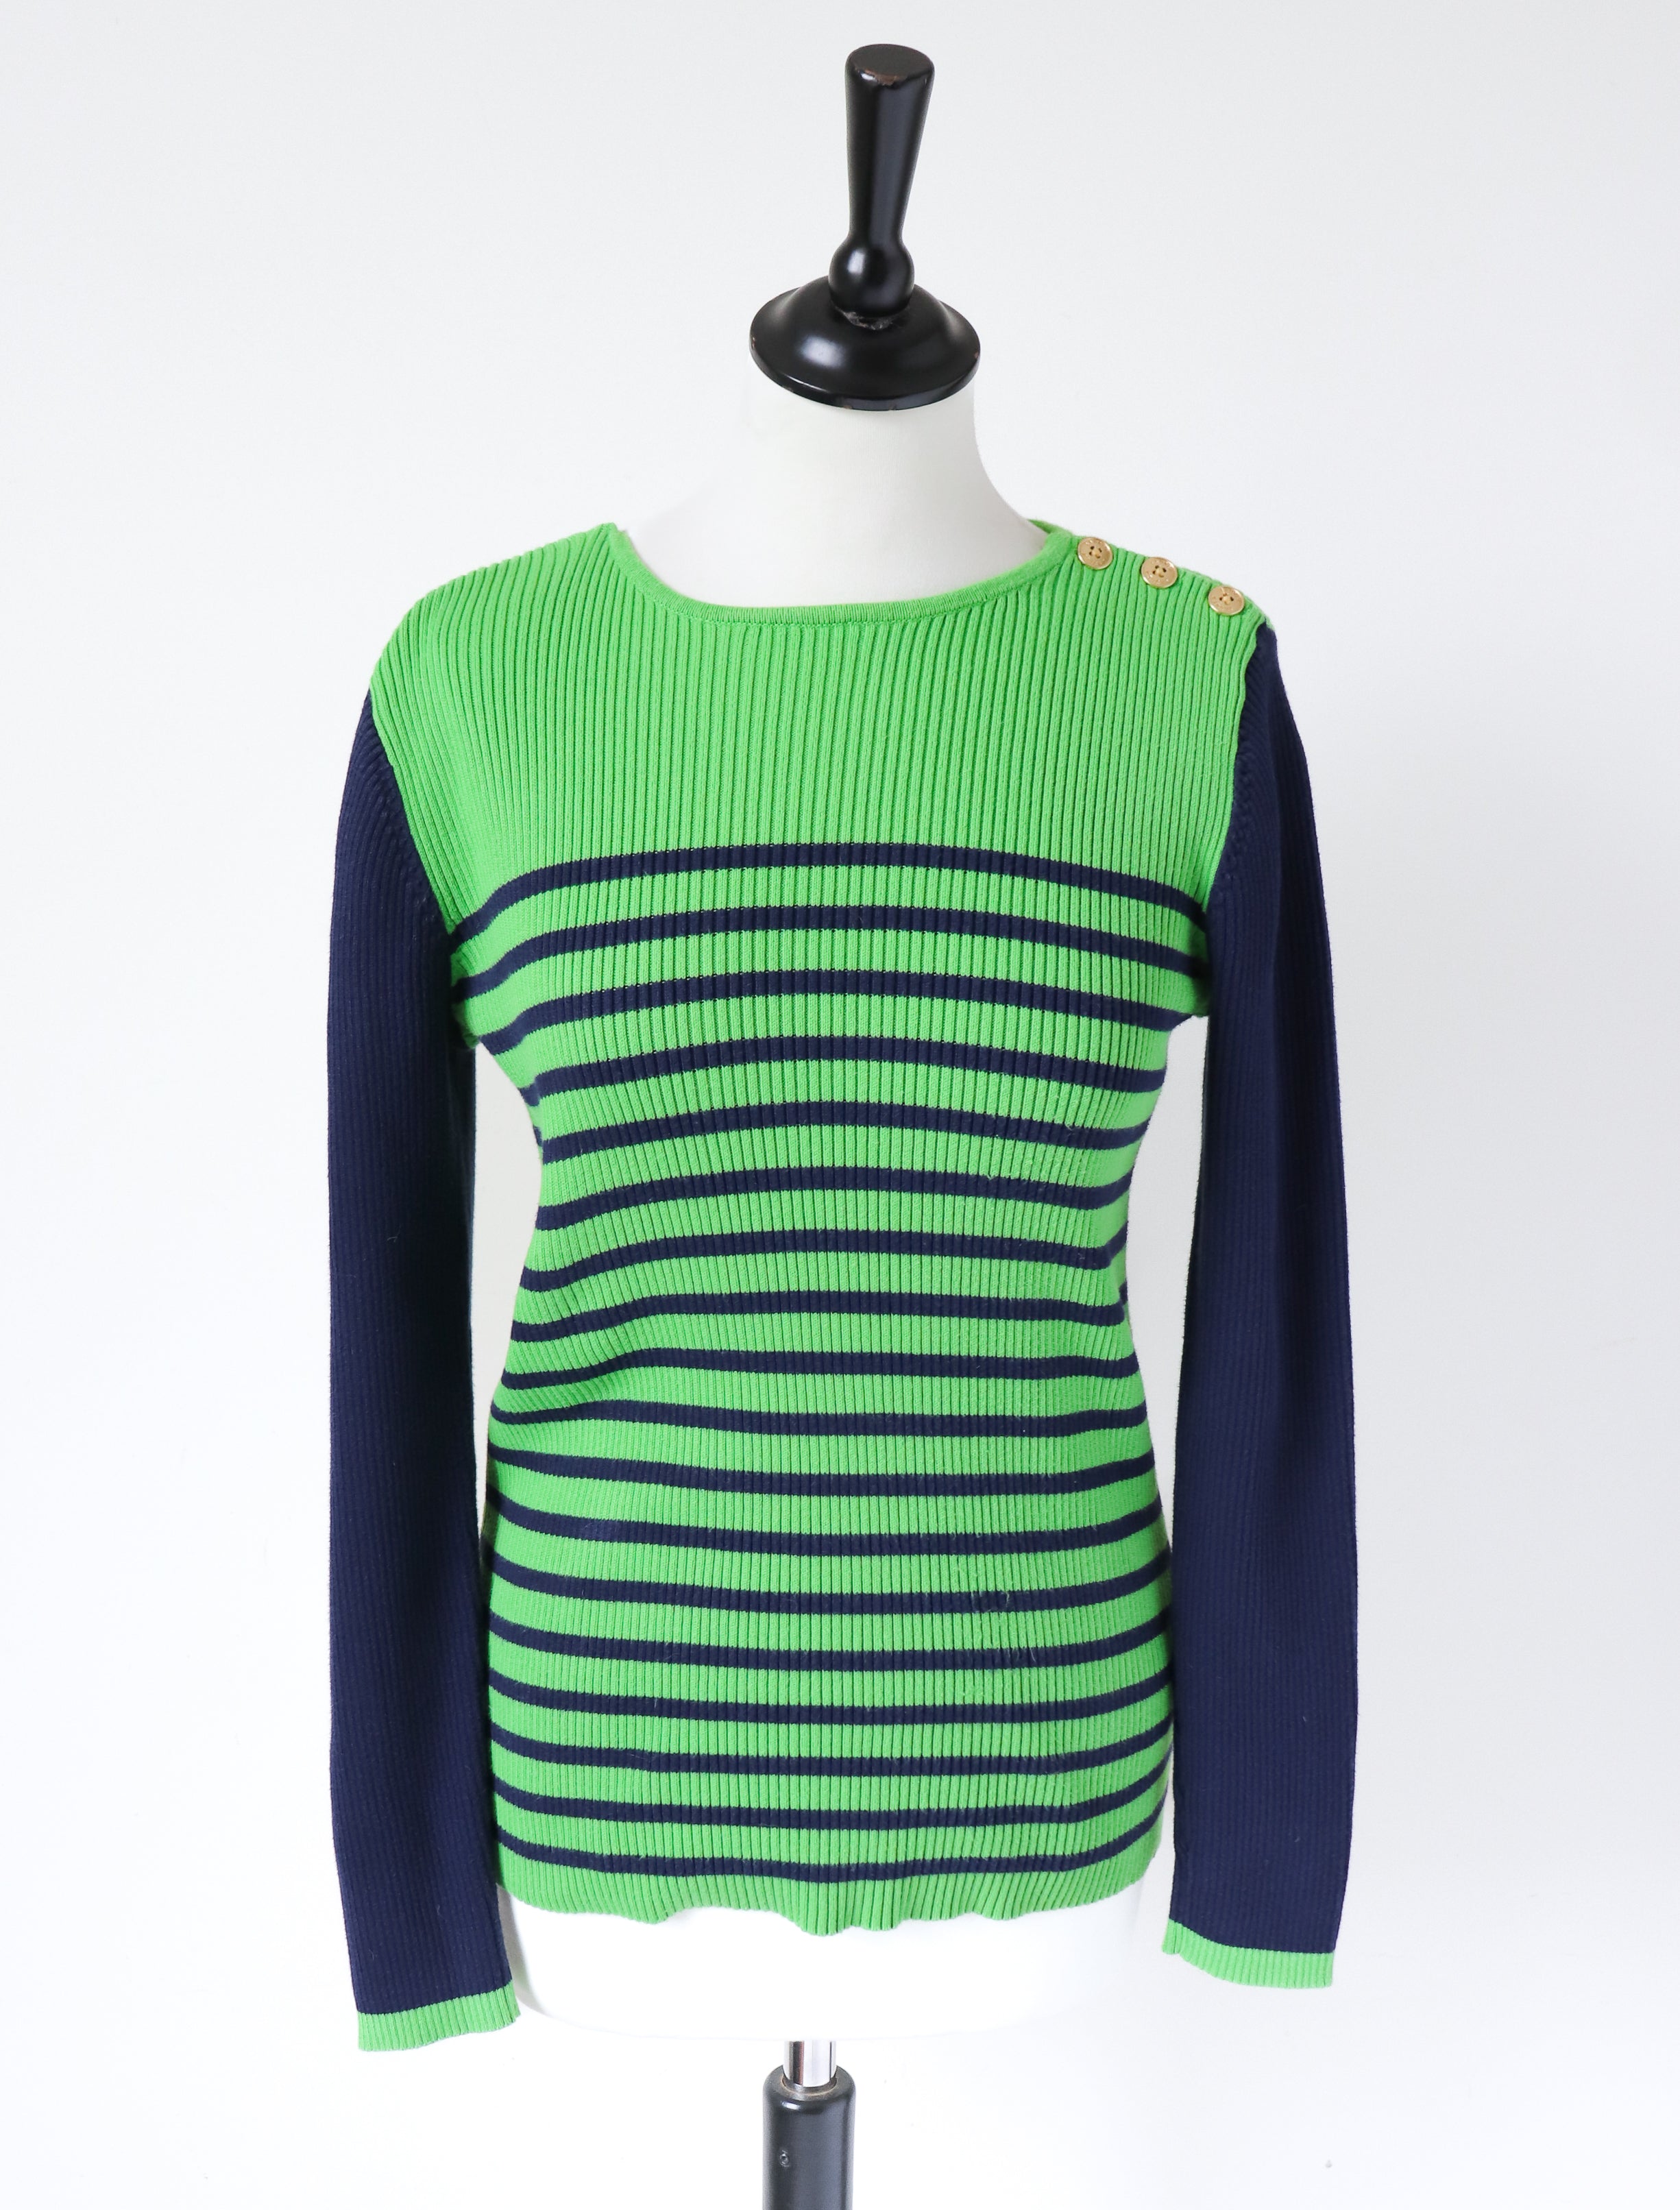 Ralph Lauren Skinny Striped Jumper - Green/Blue -  Breton - M / UK 12